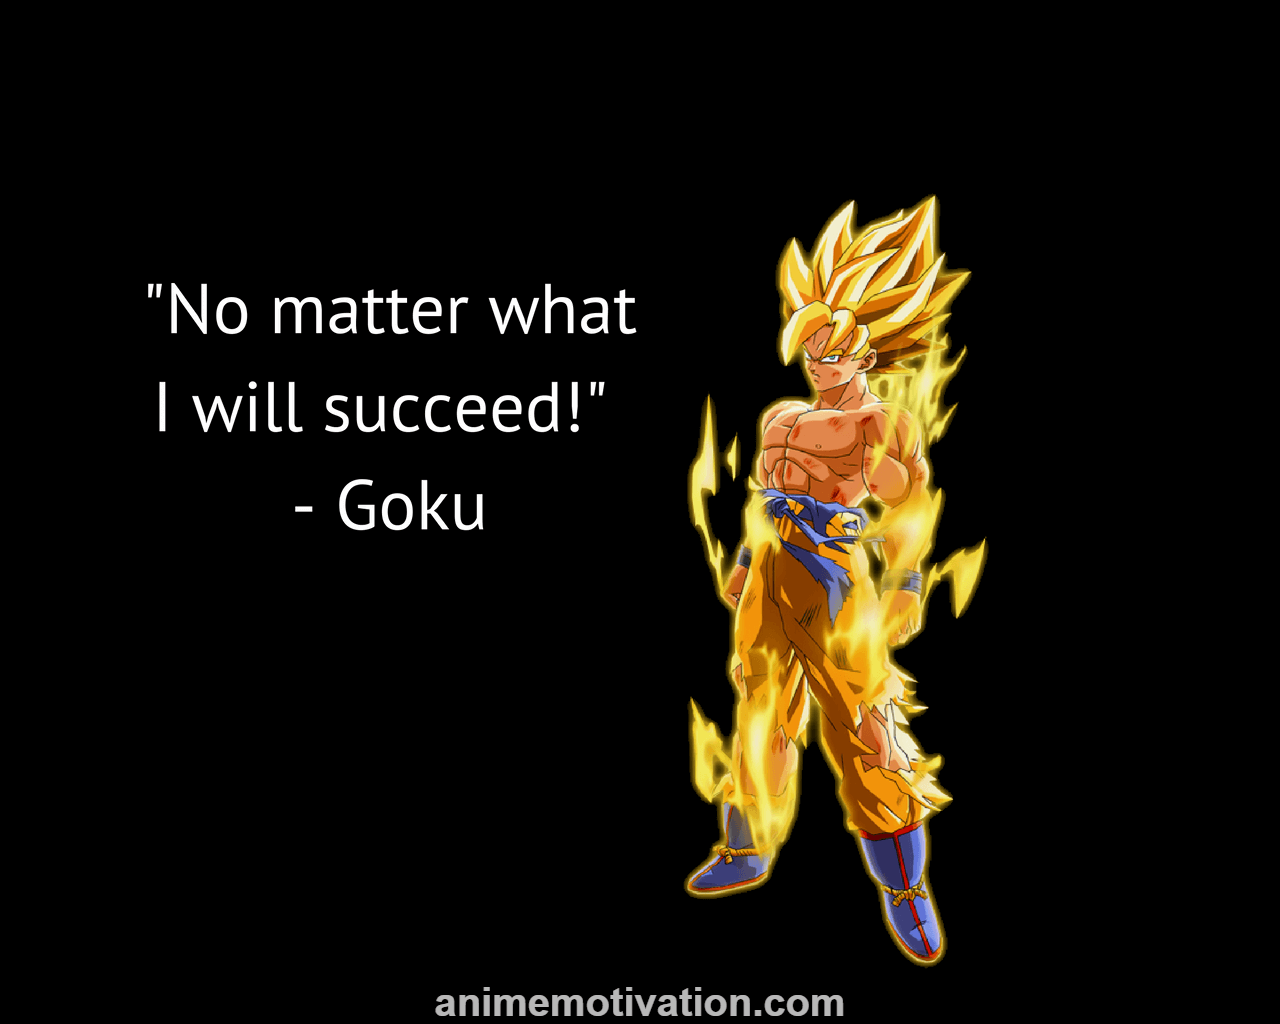 Inspirational Anime Wallpaper You Need To Download. Goku quotes, Anime quotes, Wallpaper quotes